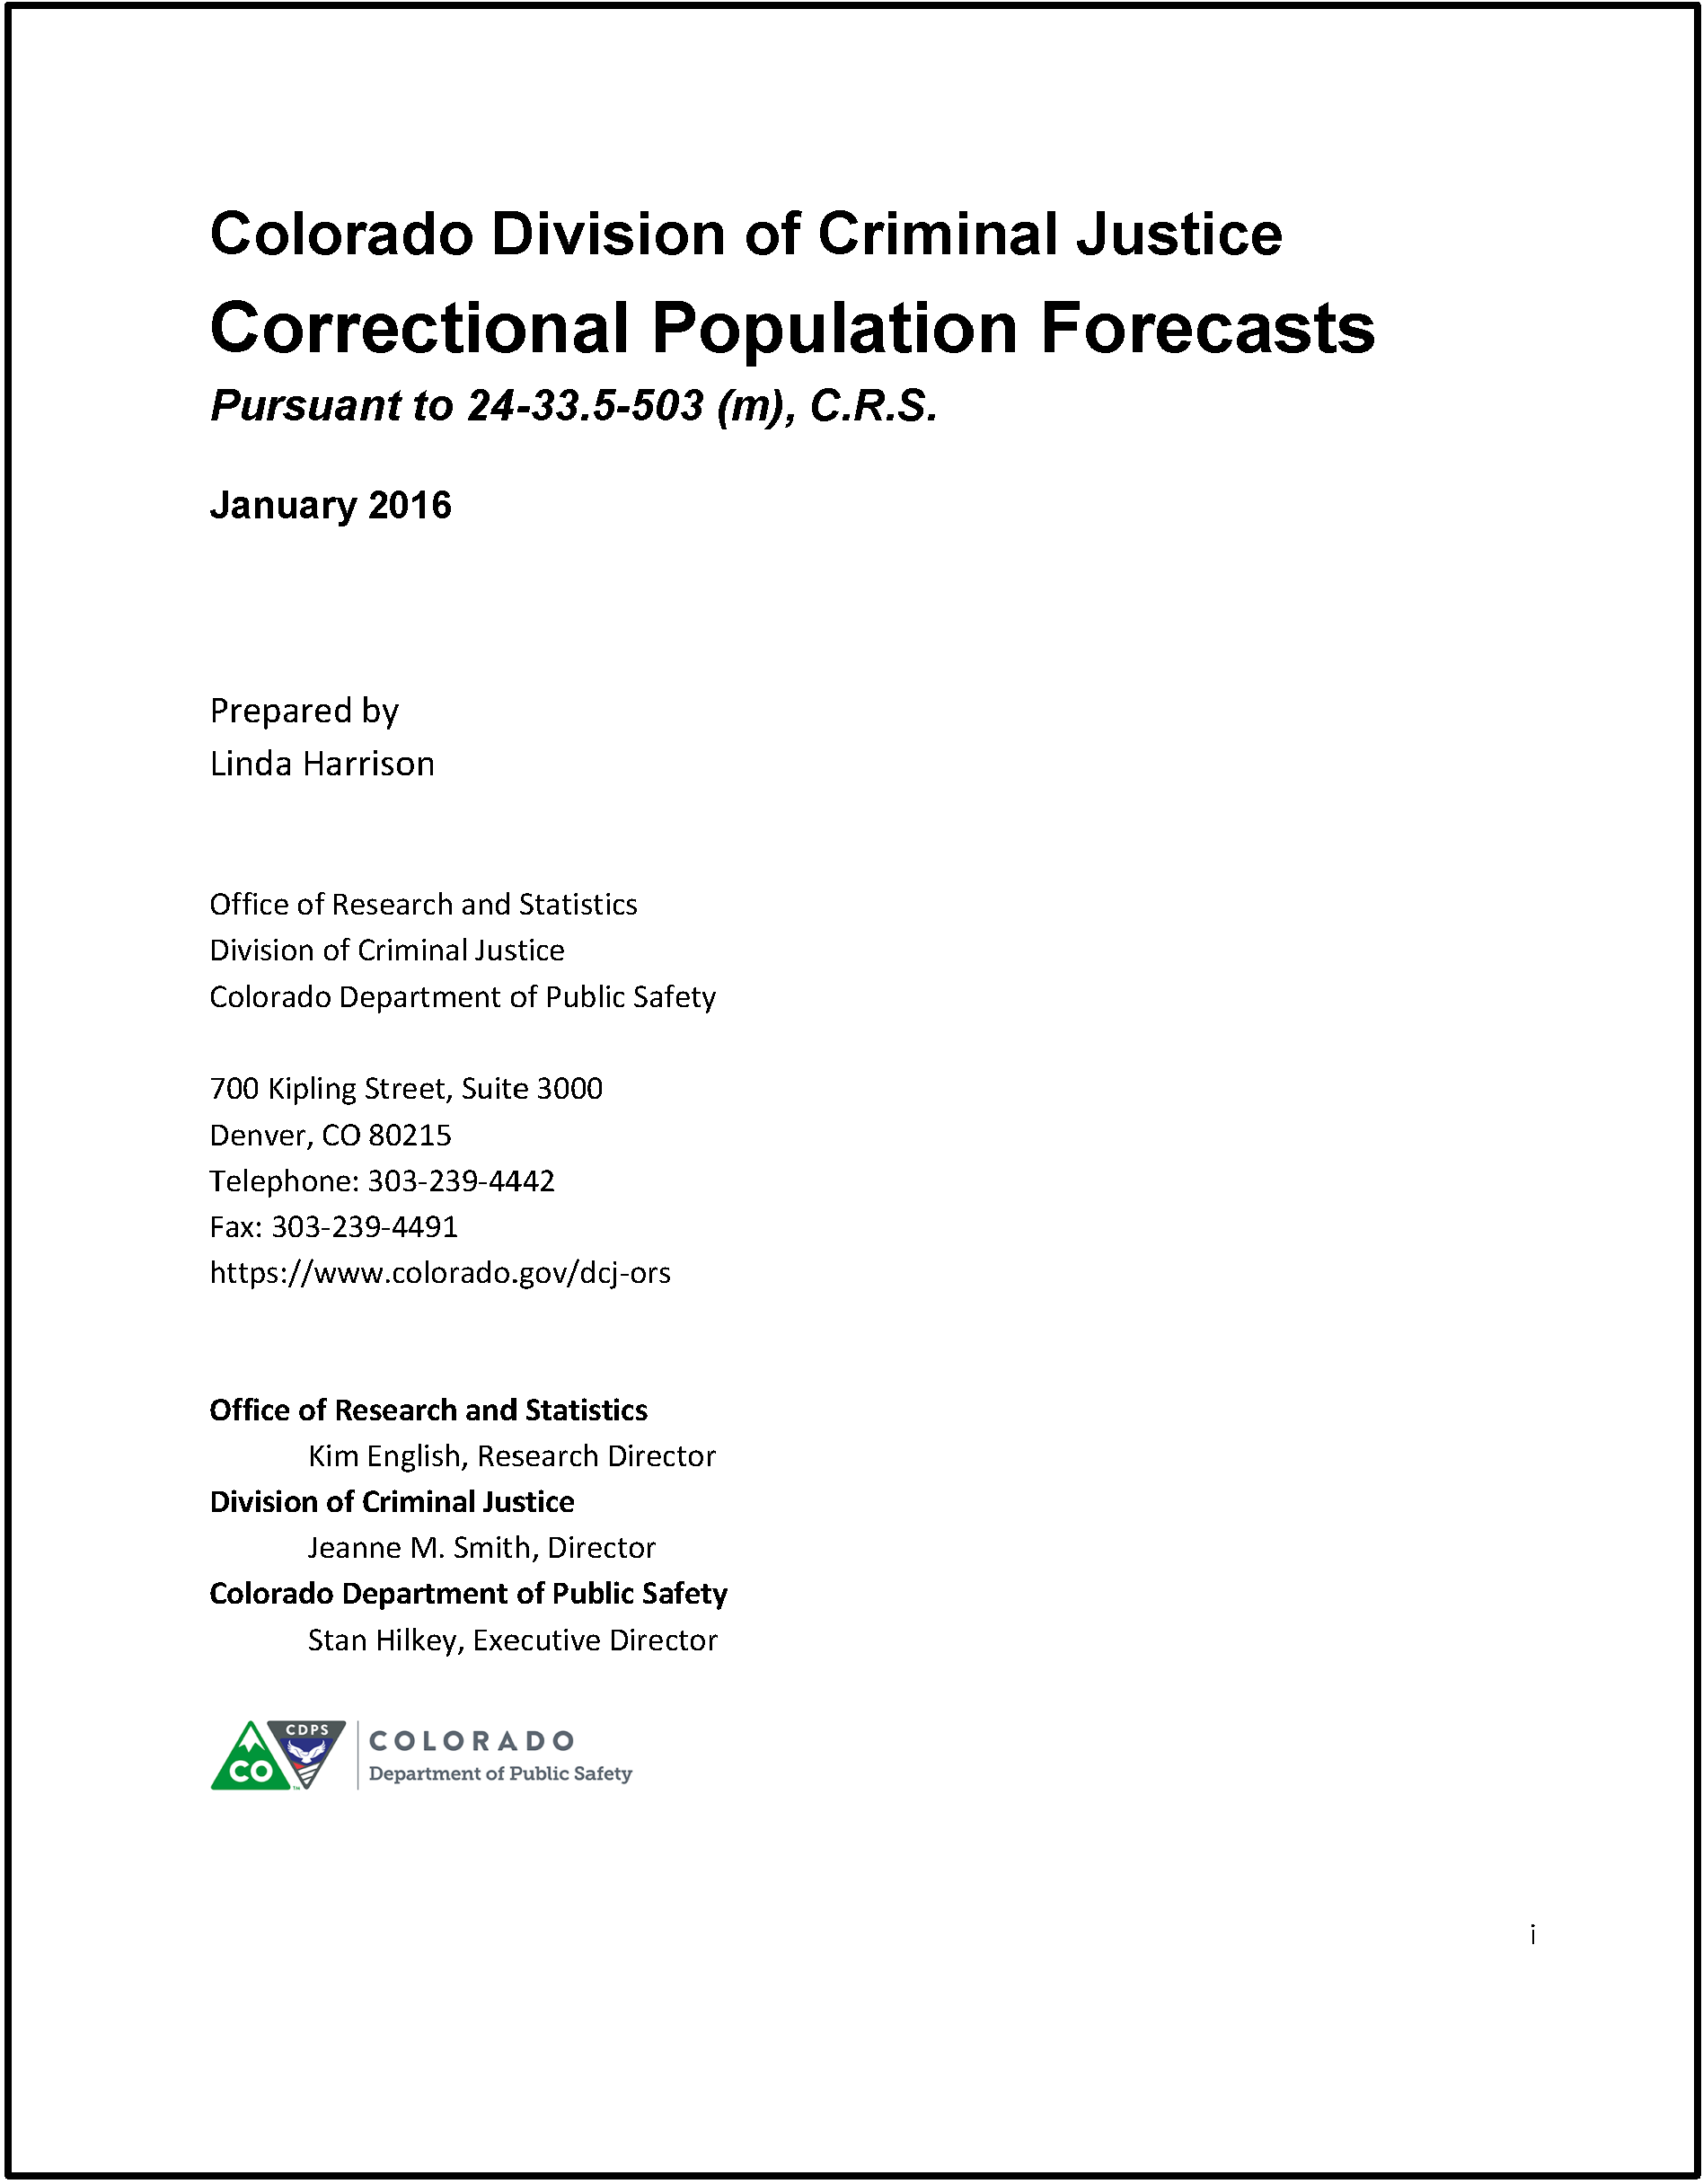 Correctional Population Forecasts, FY 2016 (January 2016)